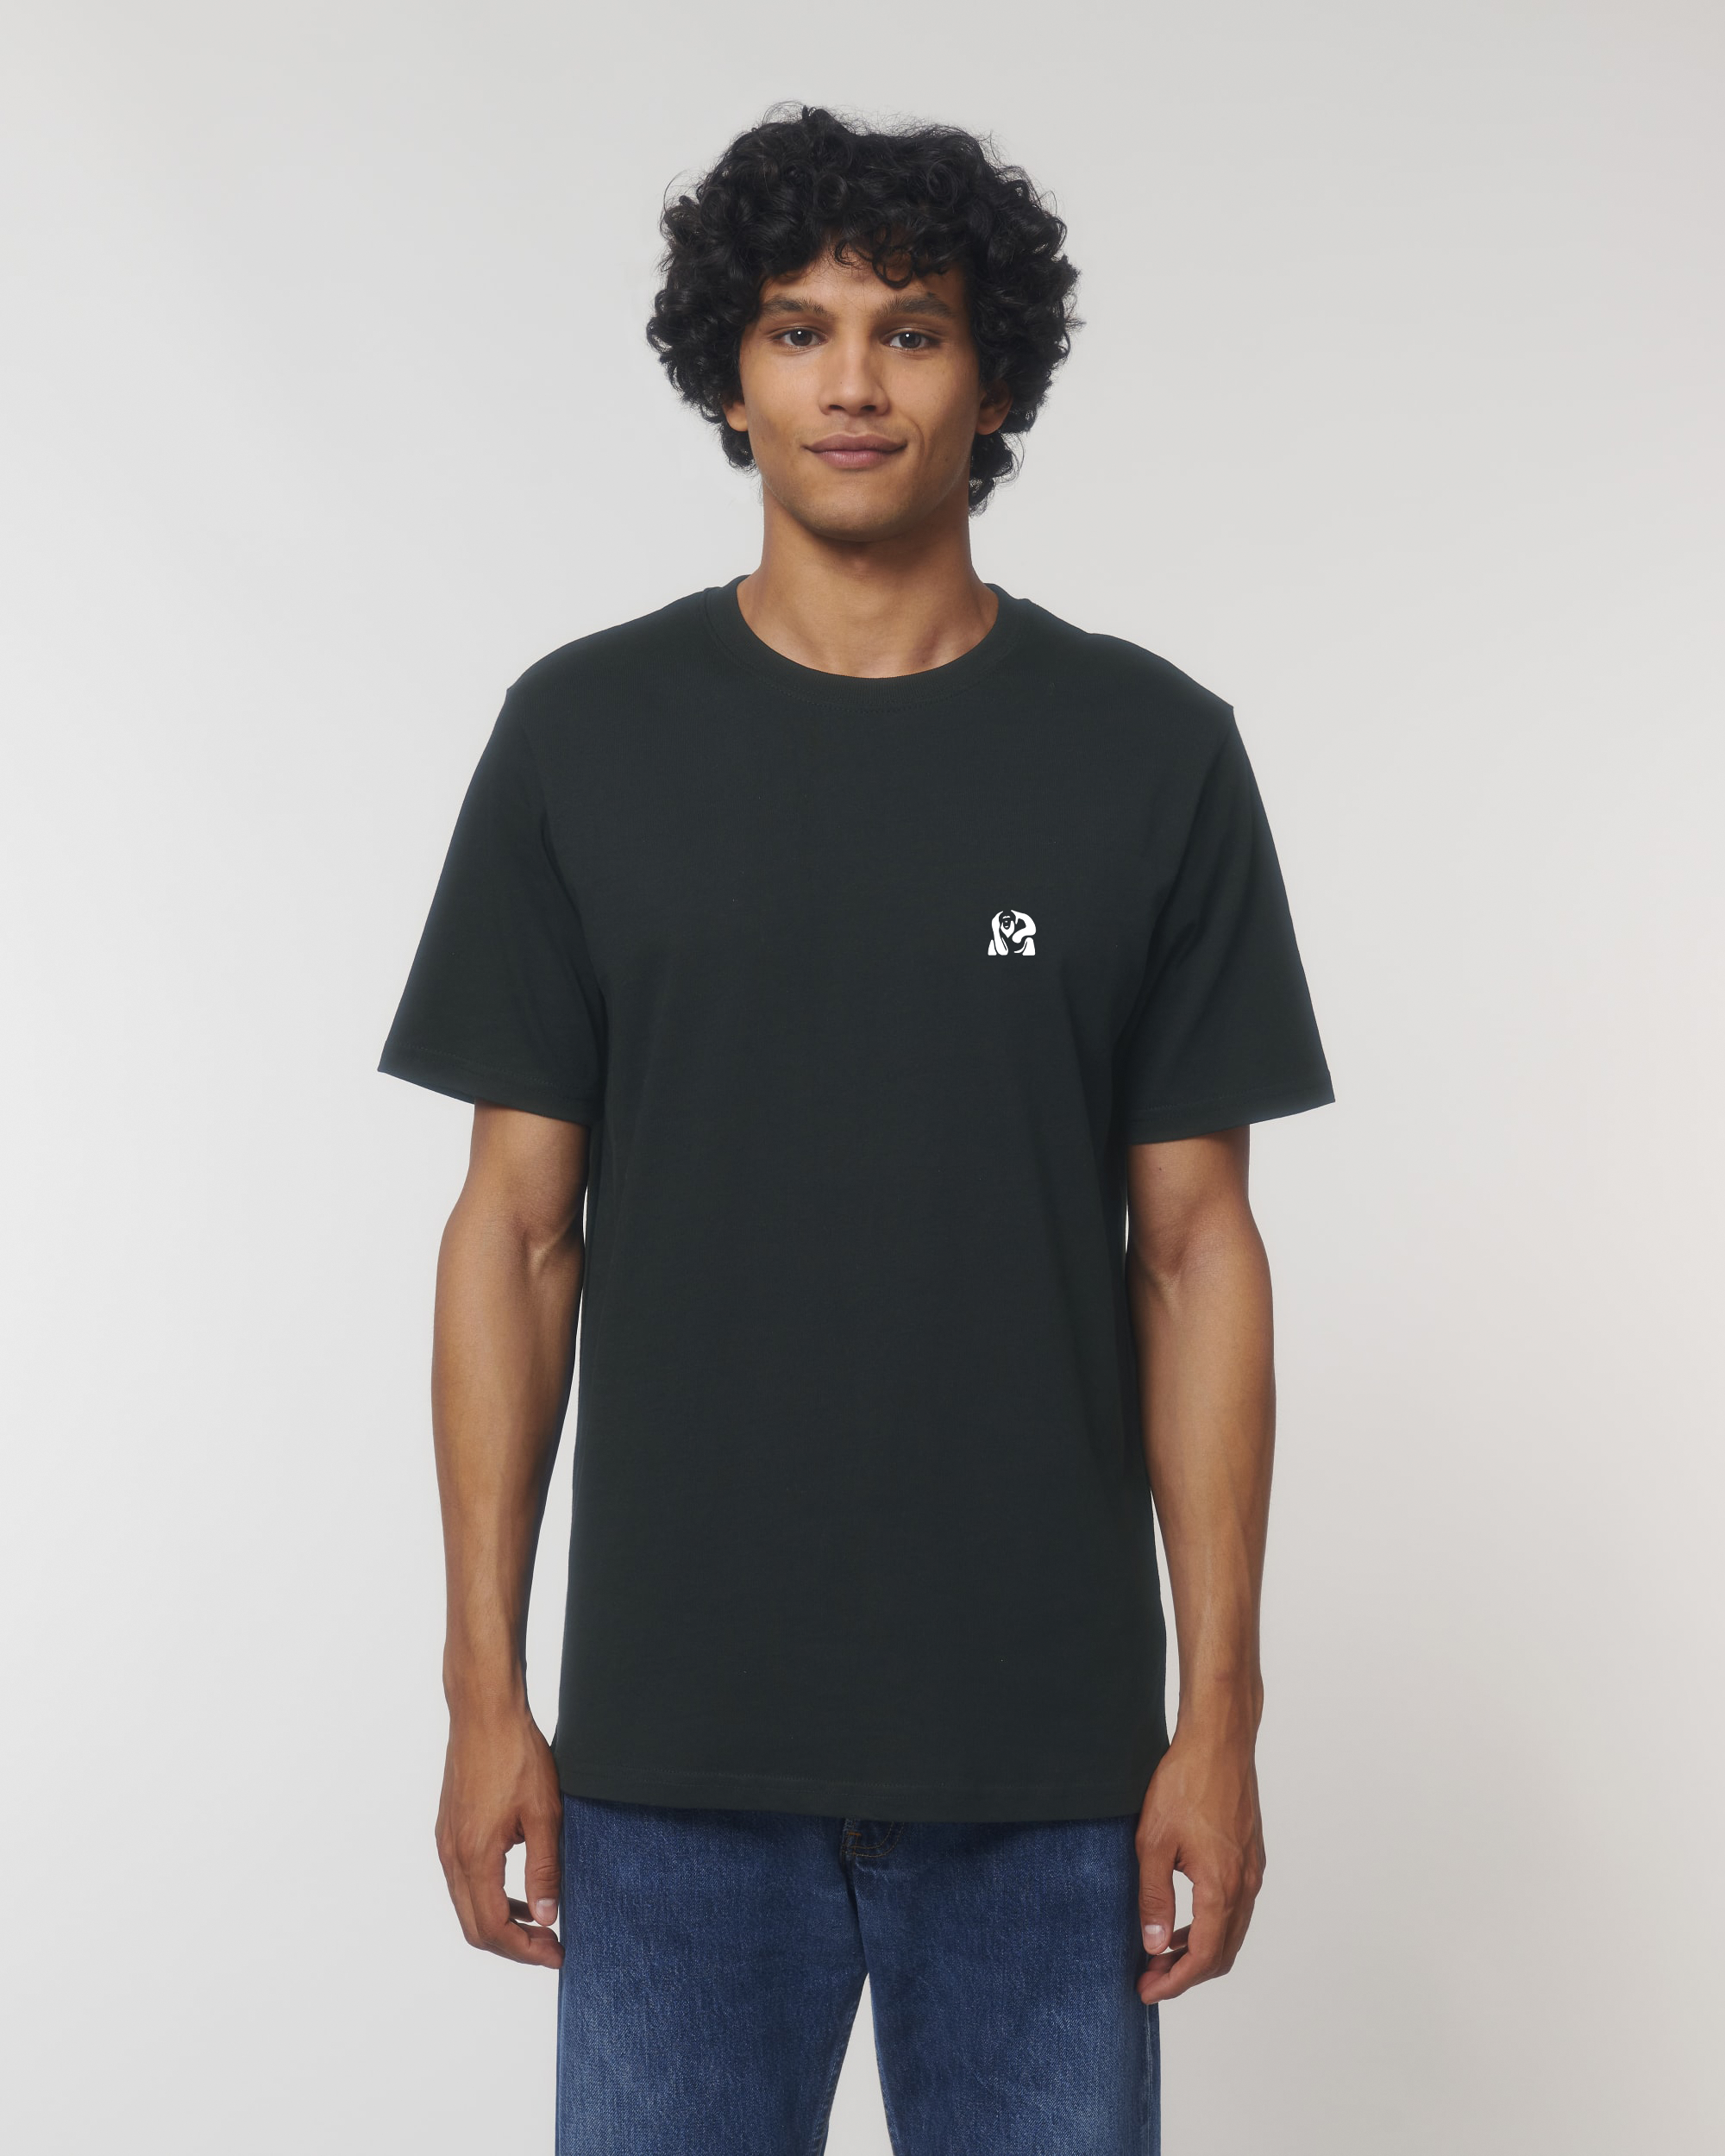 Thick unisex organic cotton t-shirt - Sumatra